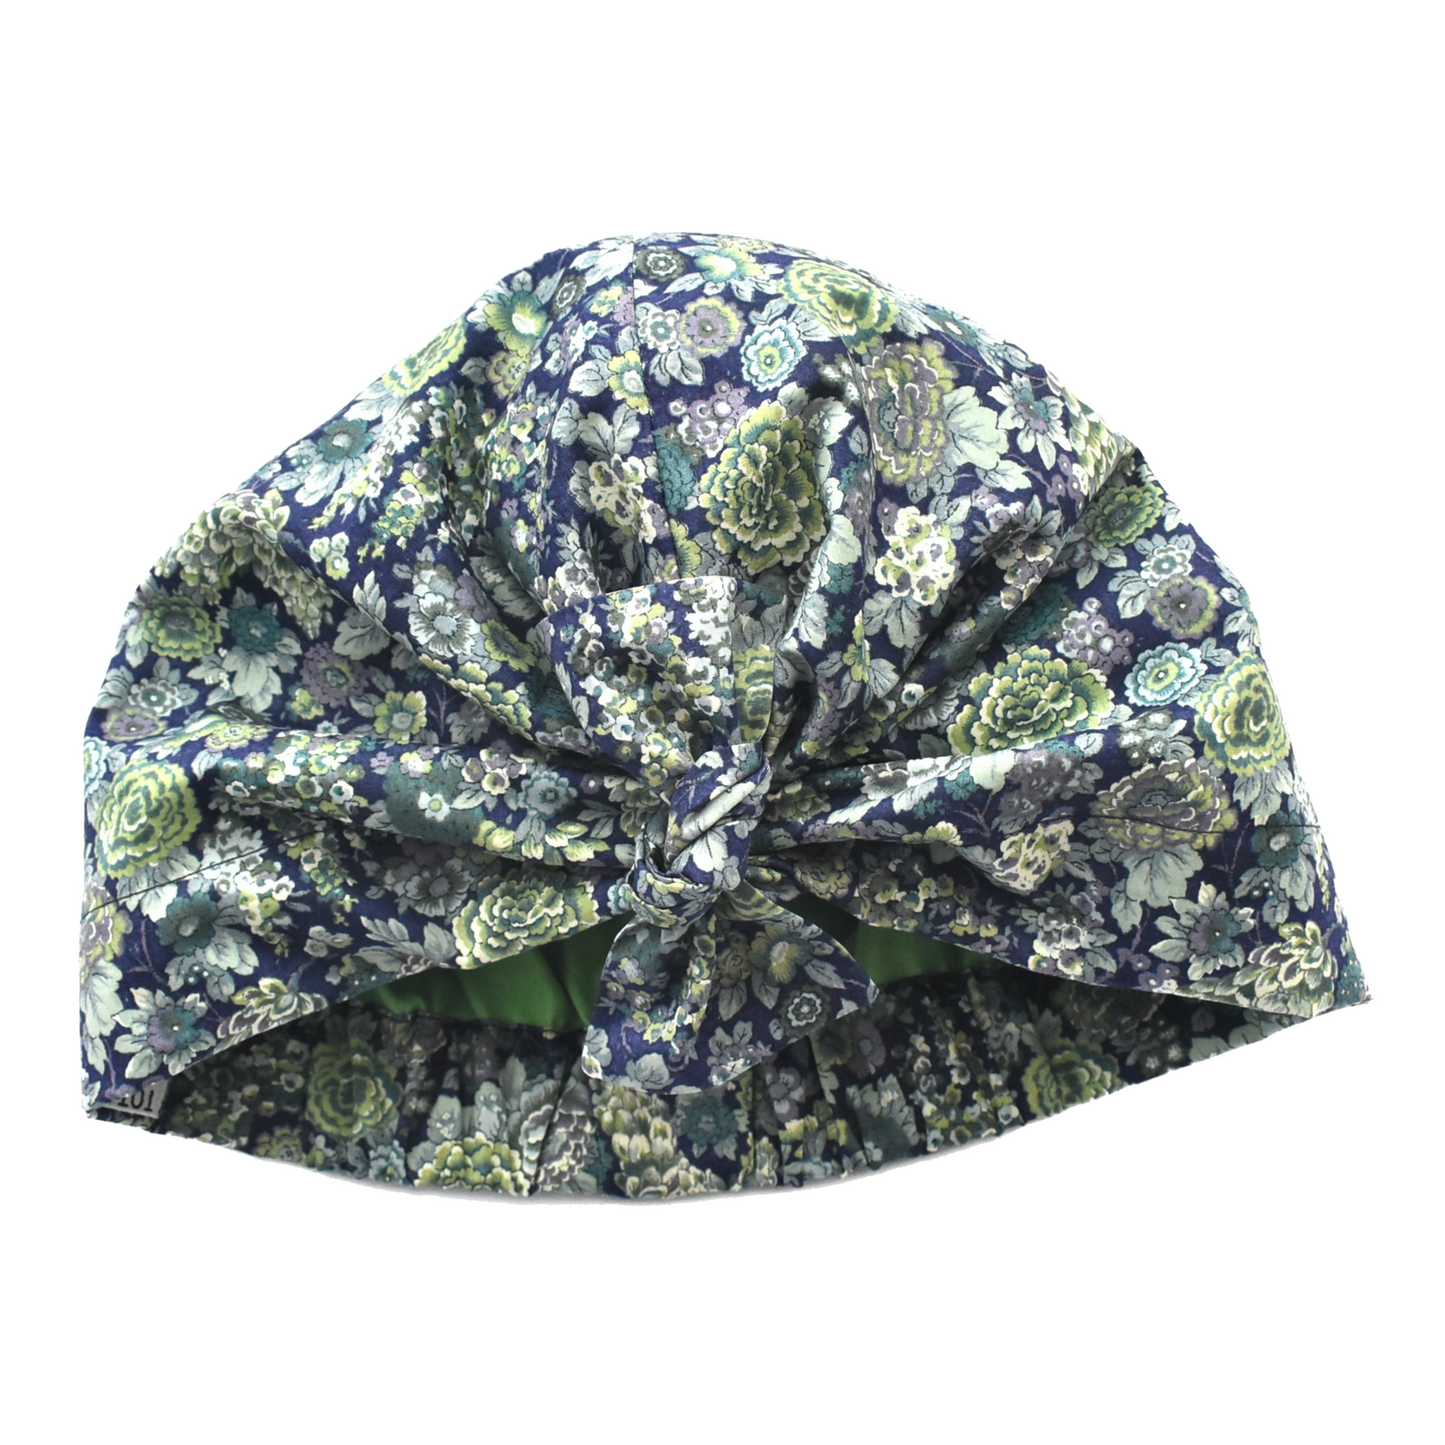 Ladies Turban Hat - Vintage Liberty of London Elysian Blue Floral print